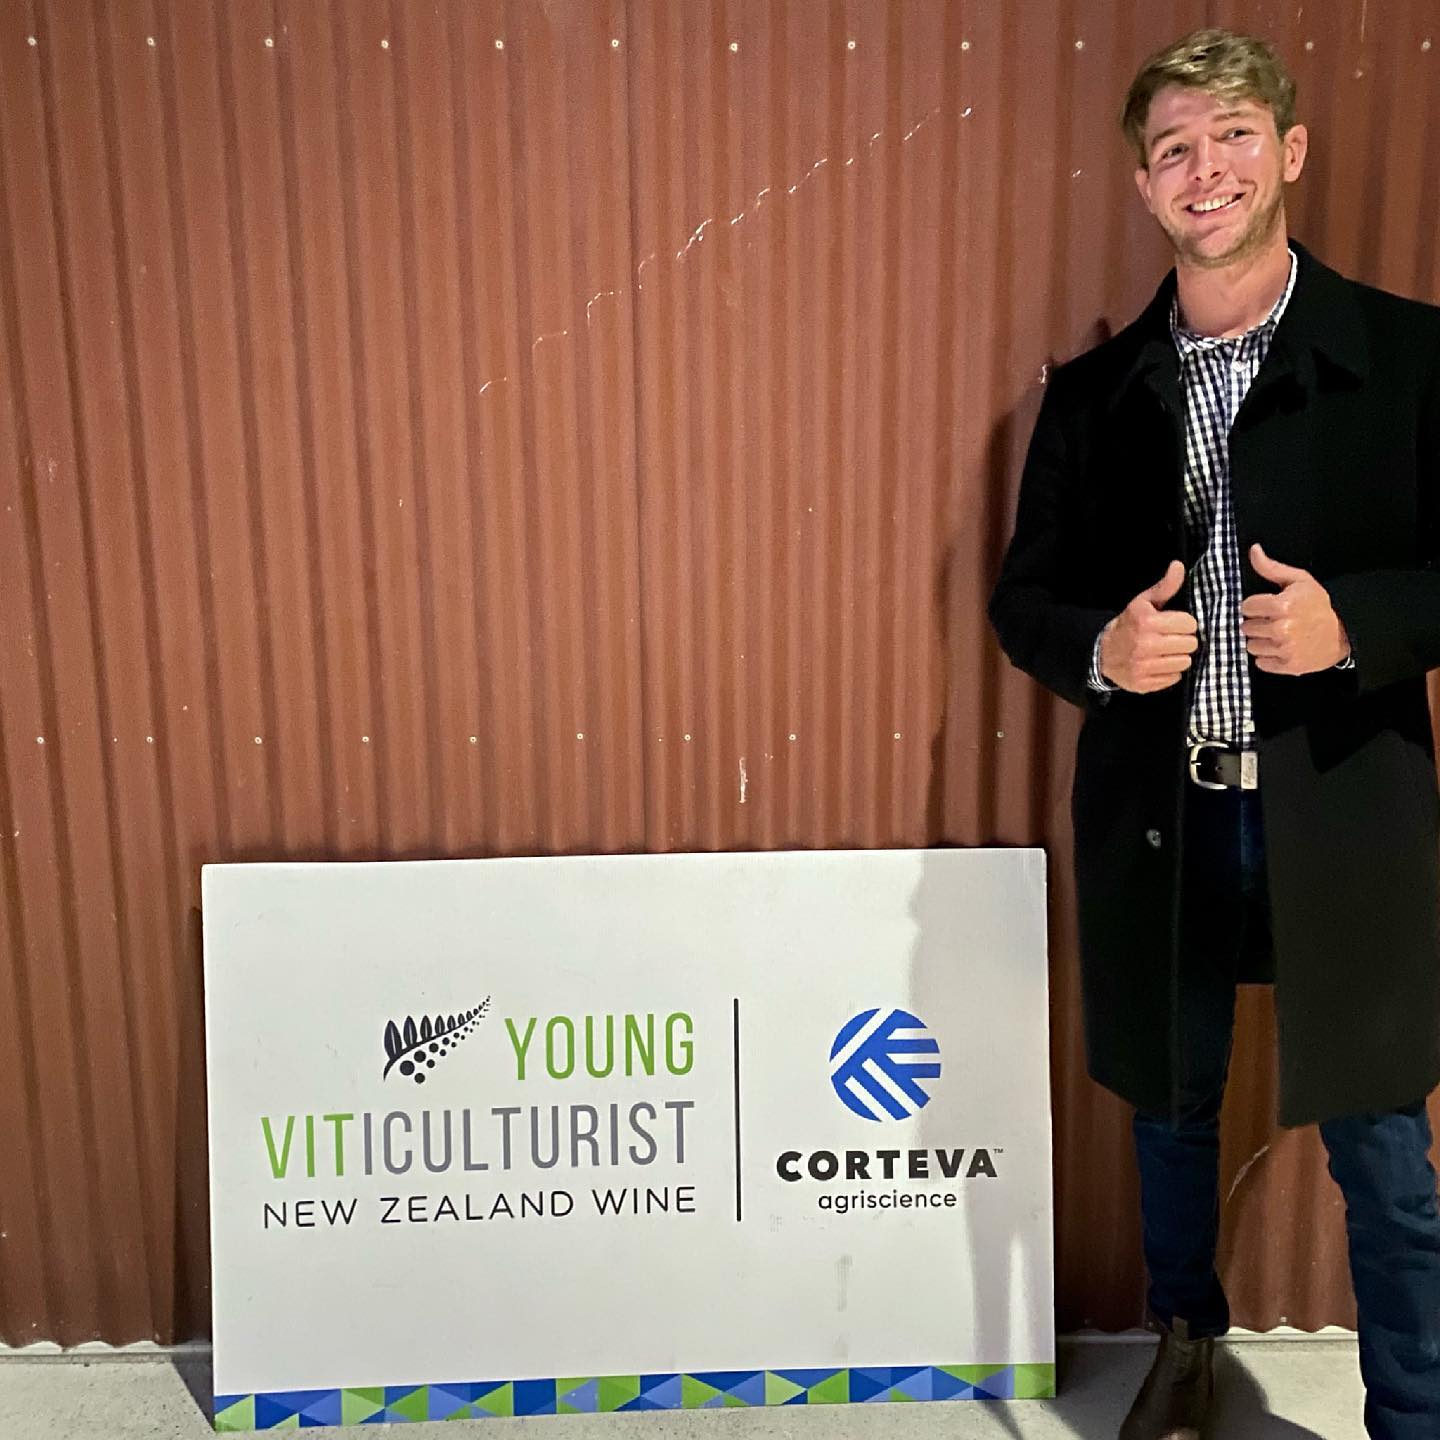 Tristan Van Schalkwylk - Winner Of The YV North Canterbury Competition